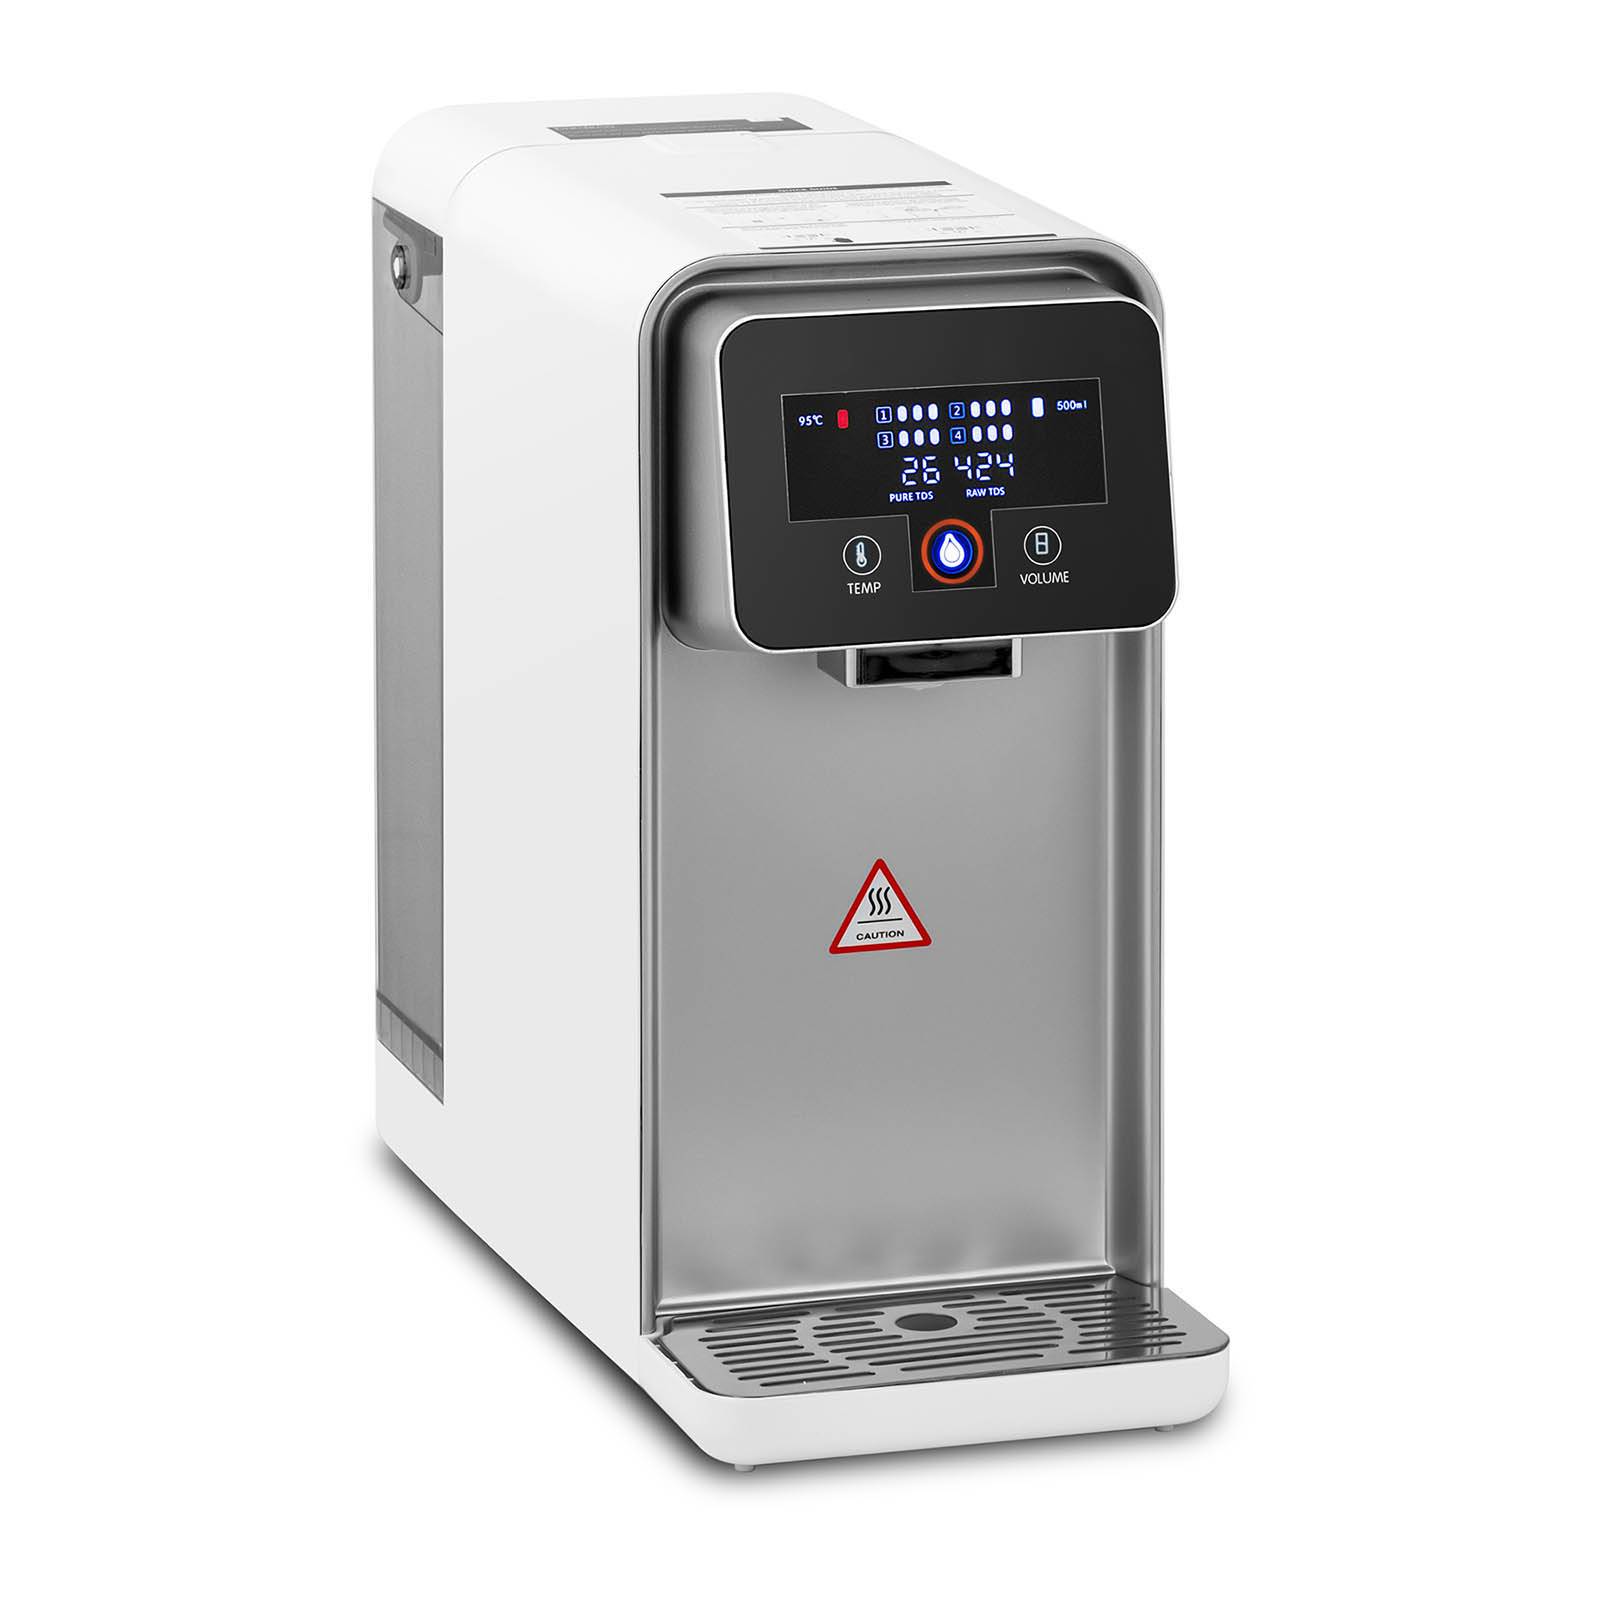 Factory Free sample 2 Liter Water Purifier – PREMIUM II-Instant Hot RO Water Dispenser – Auautal